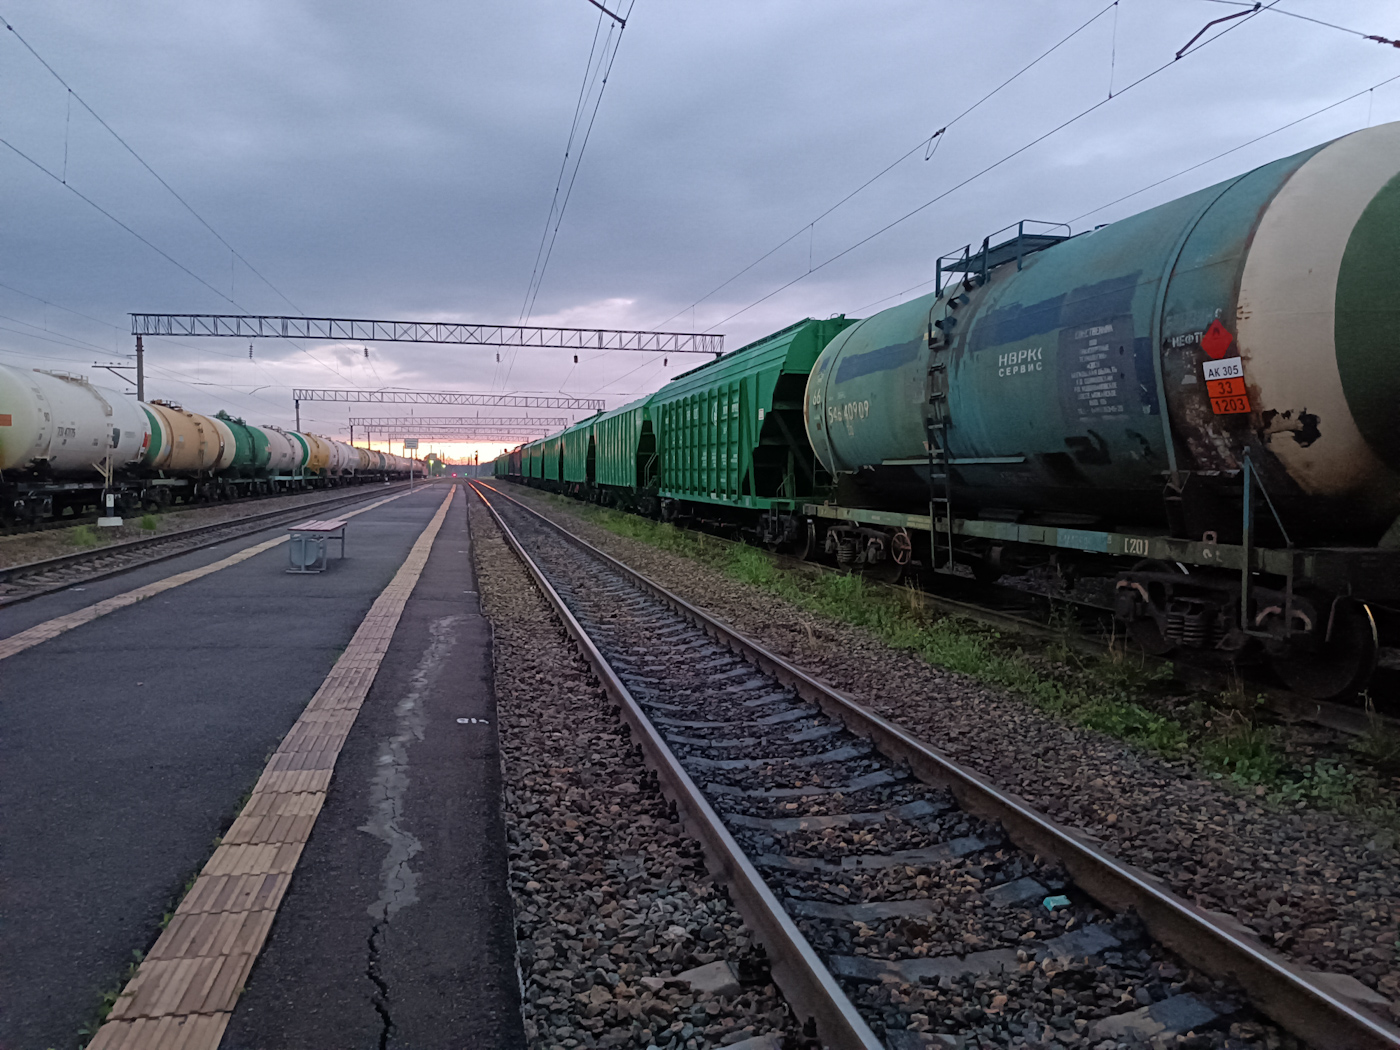 Gorky Railway — Stations